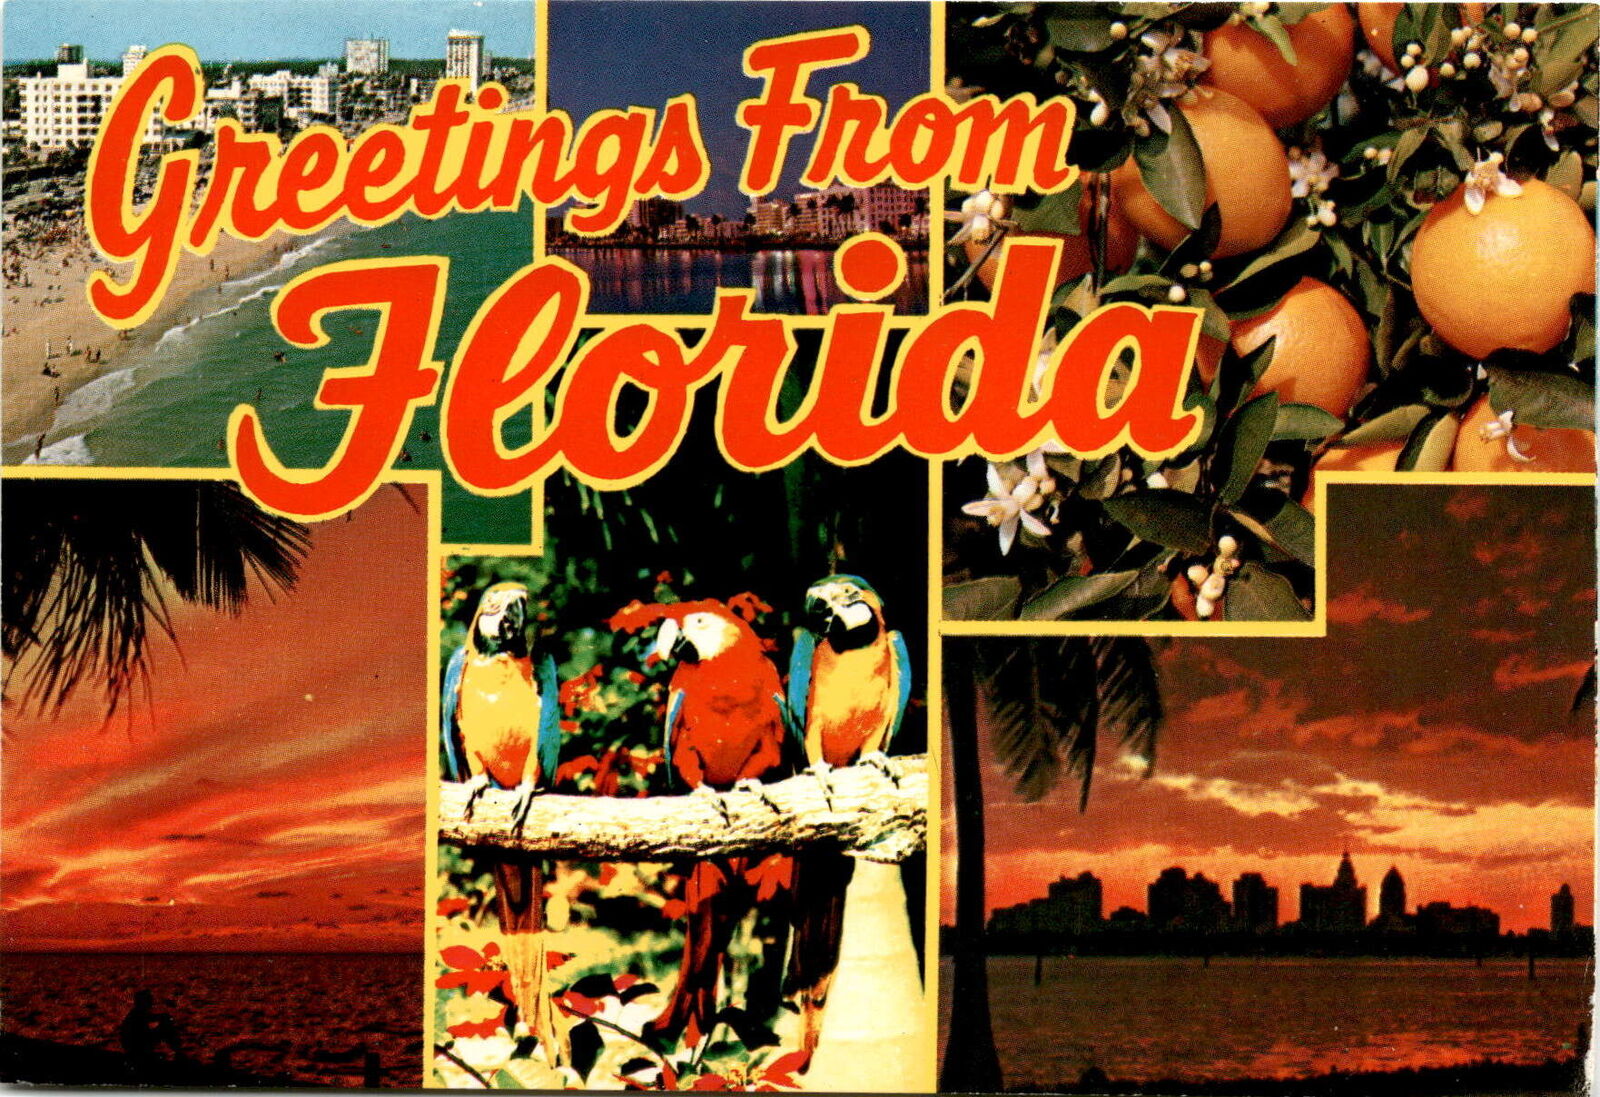 Florida, sunshine, beauty, fun, southeastern region, warm climate, Postcard